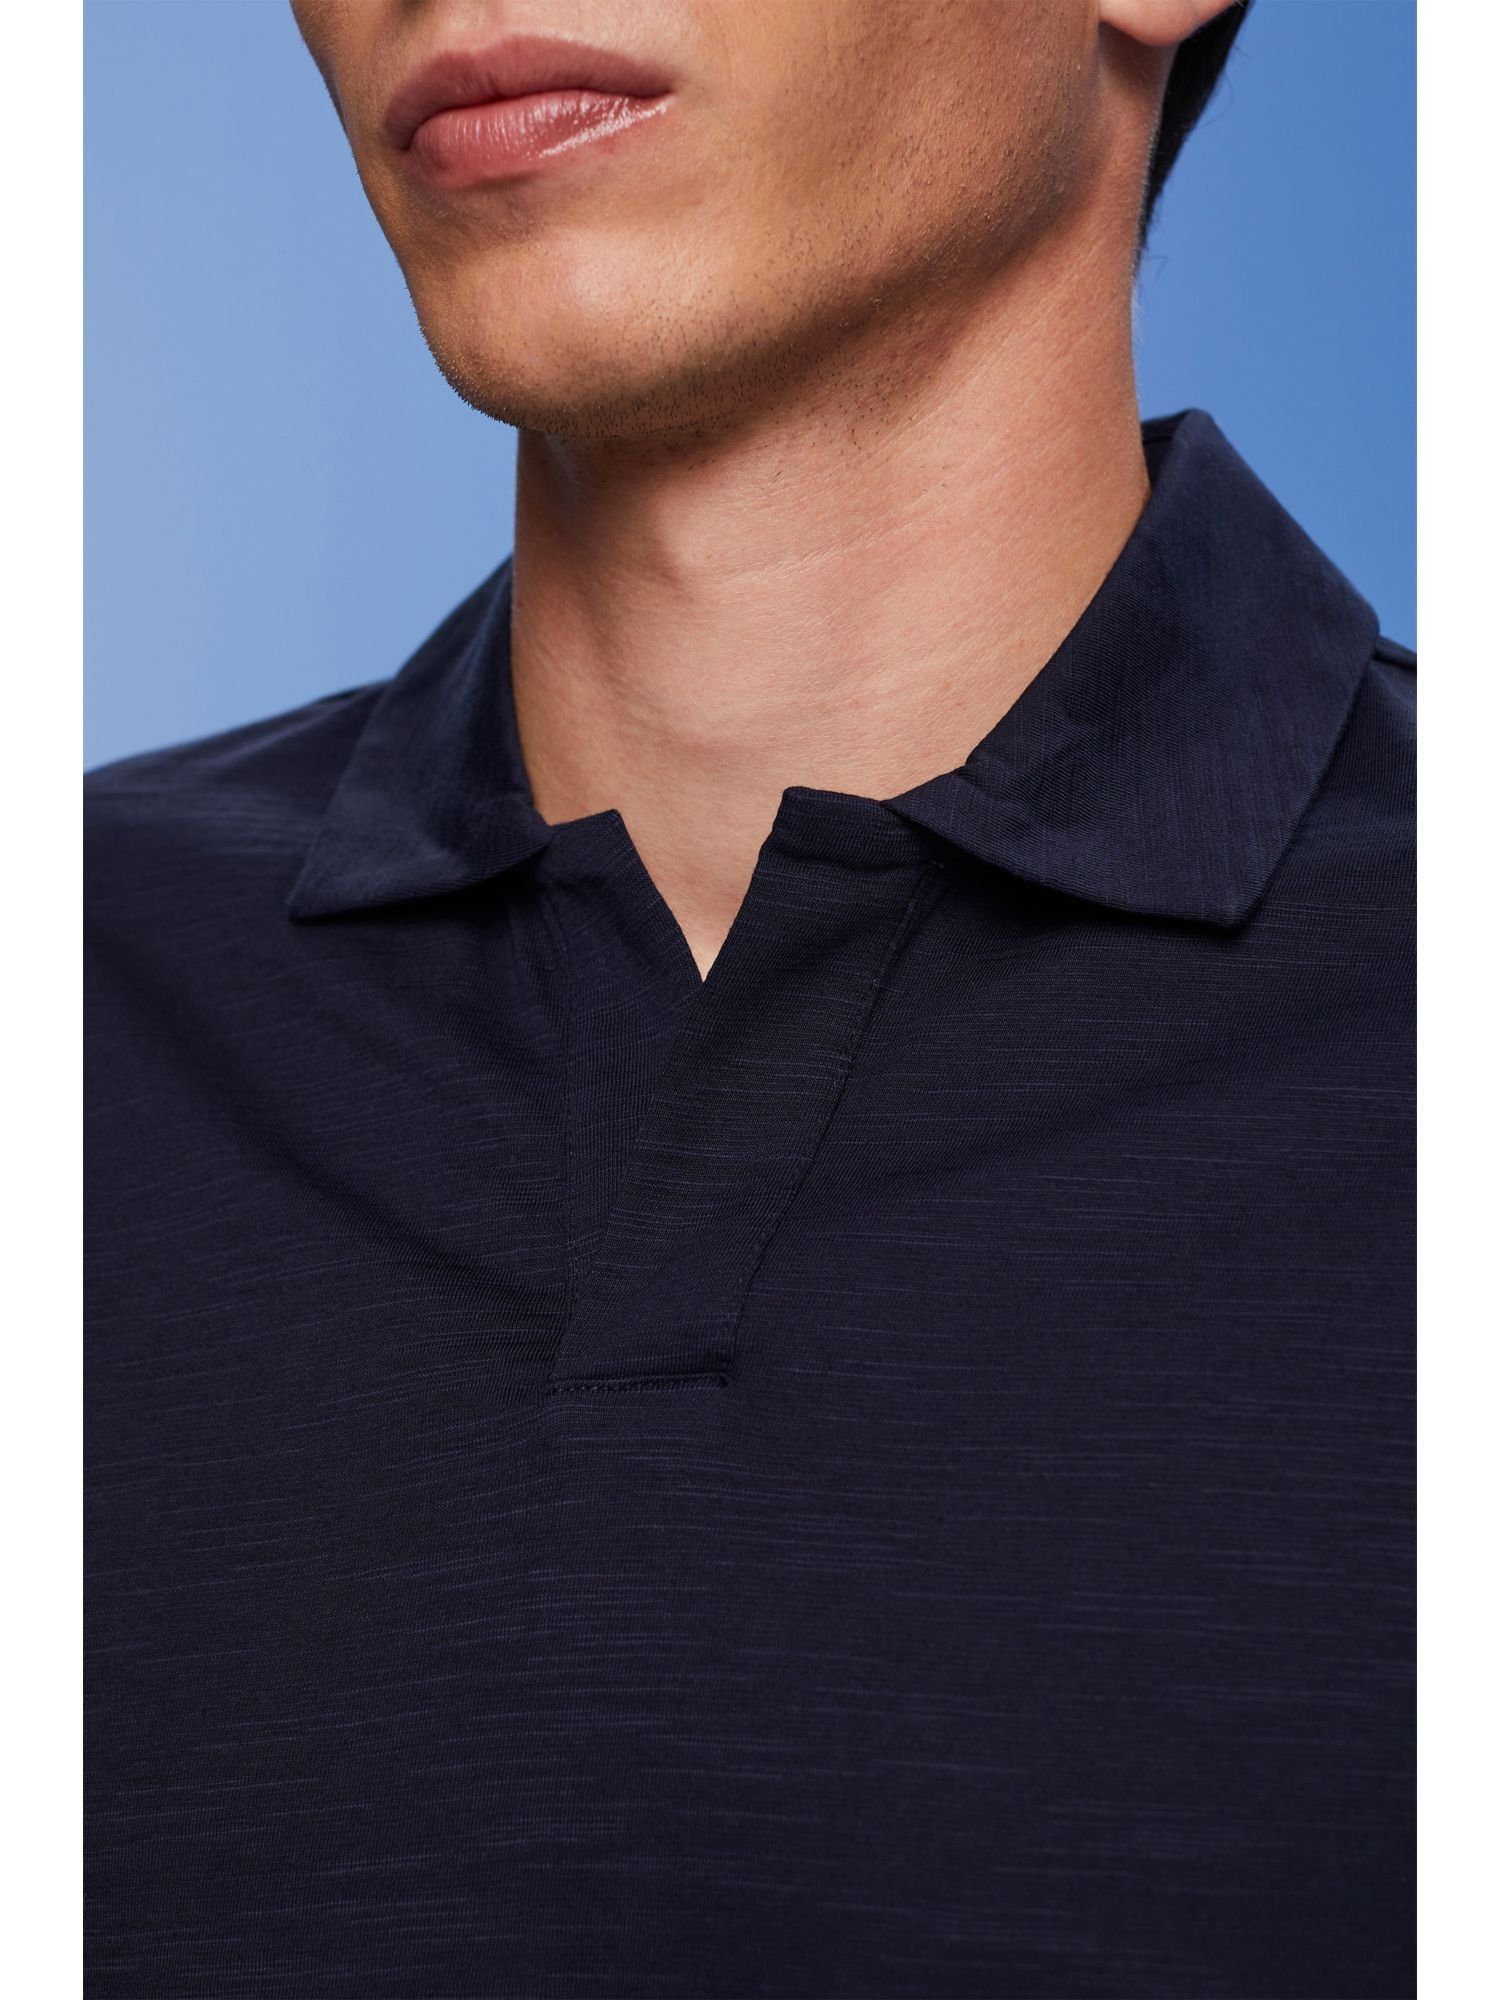 Poloshirt Jersey, Poloshirt Esprit NAVY Baumwolle % Collection 100 aus